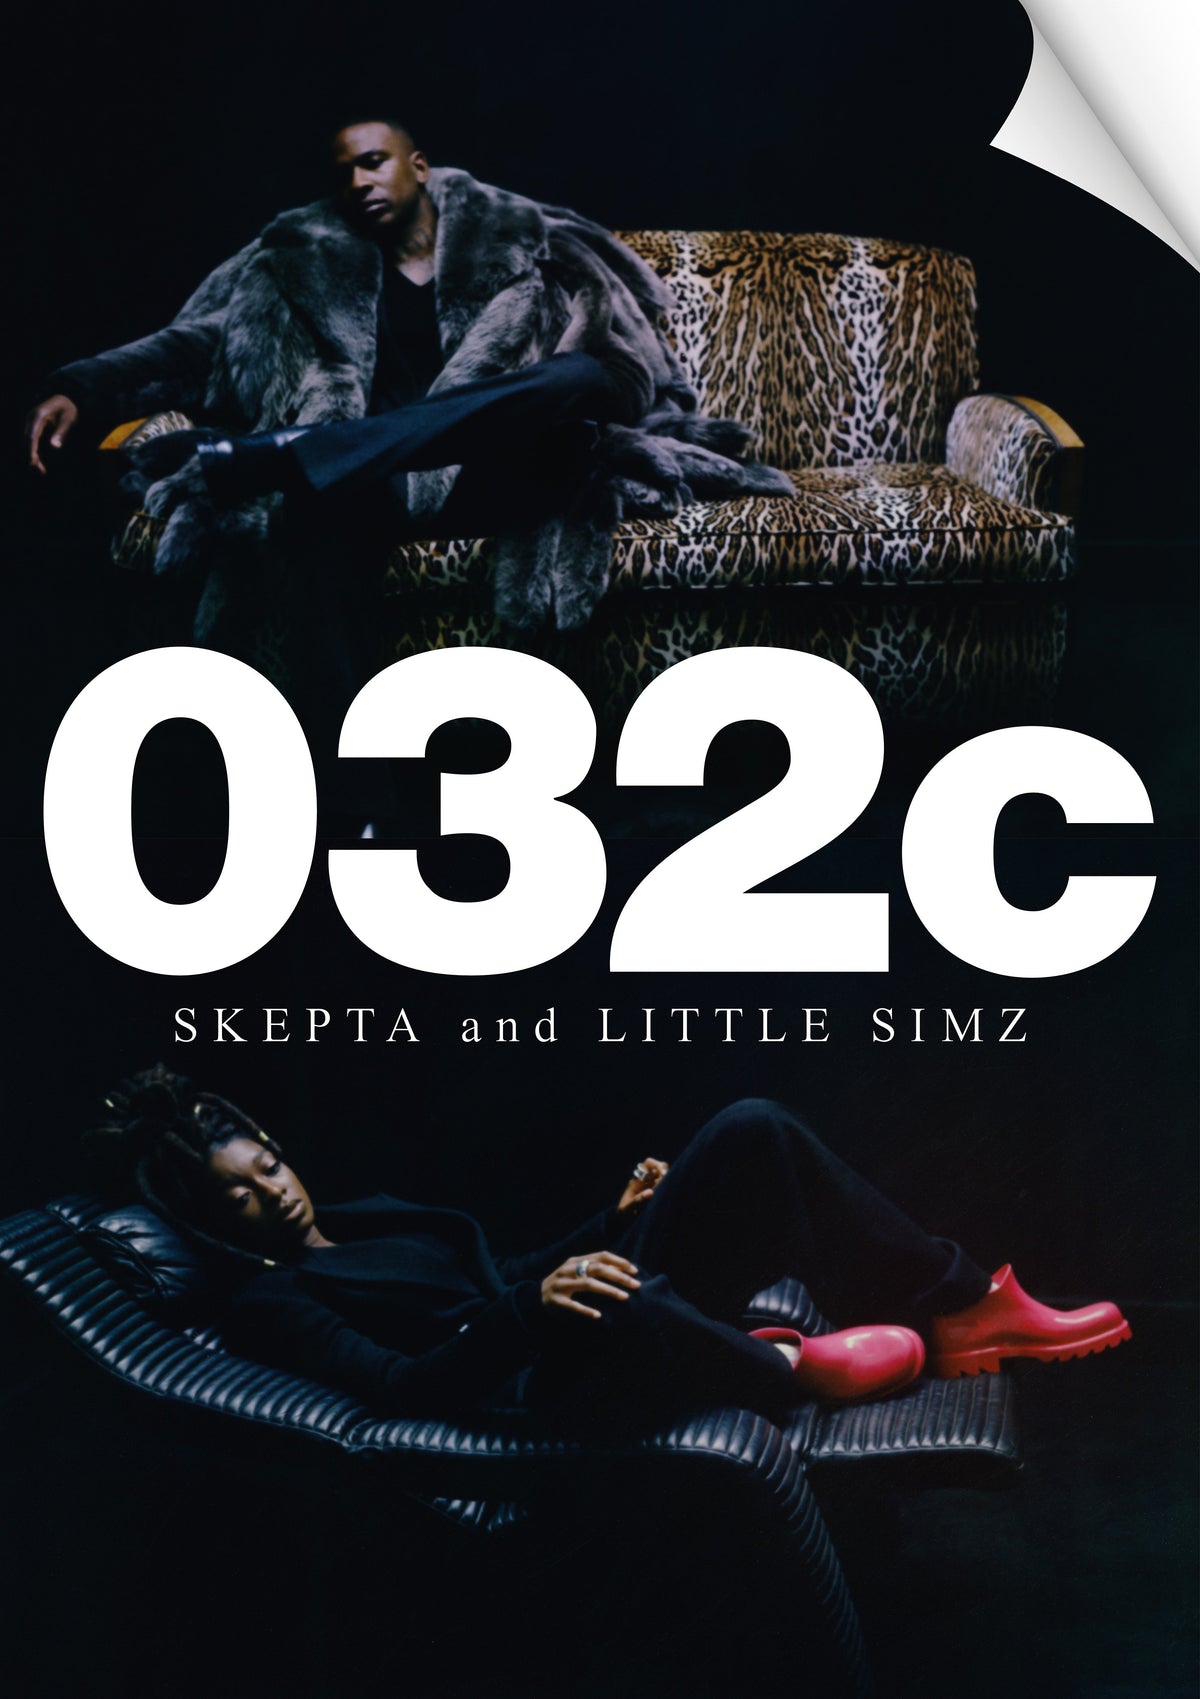 032c Winter 2021/2022 Poster - Skepta & Little Simz